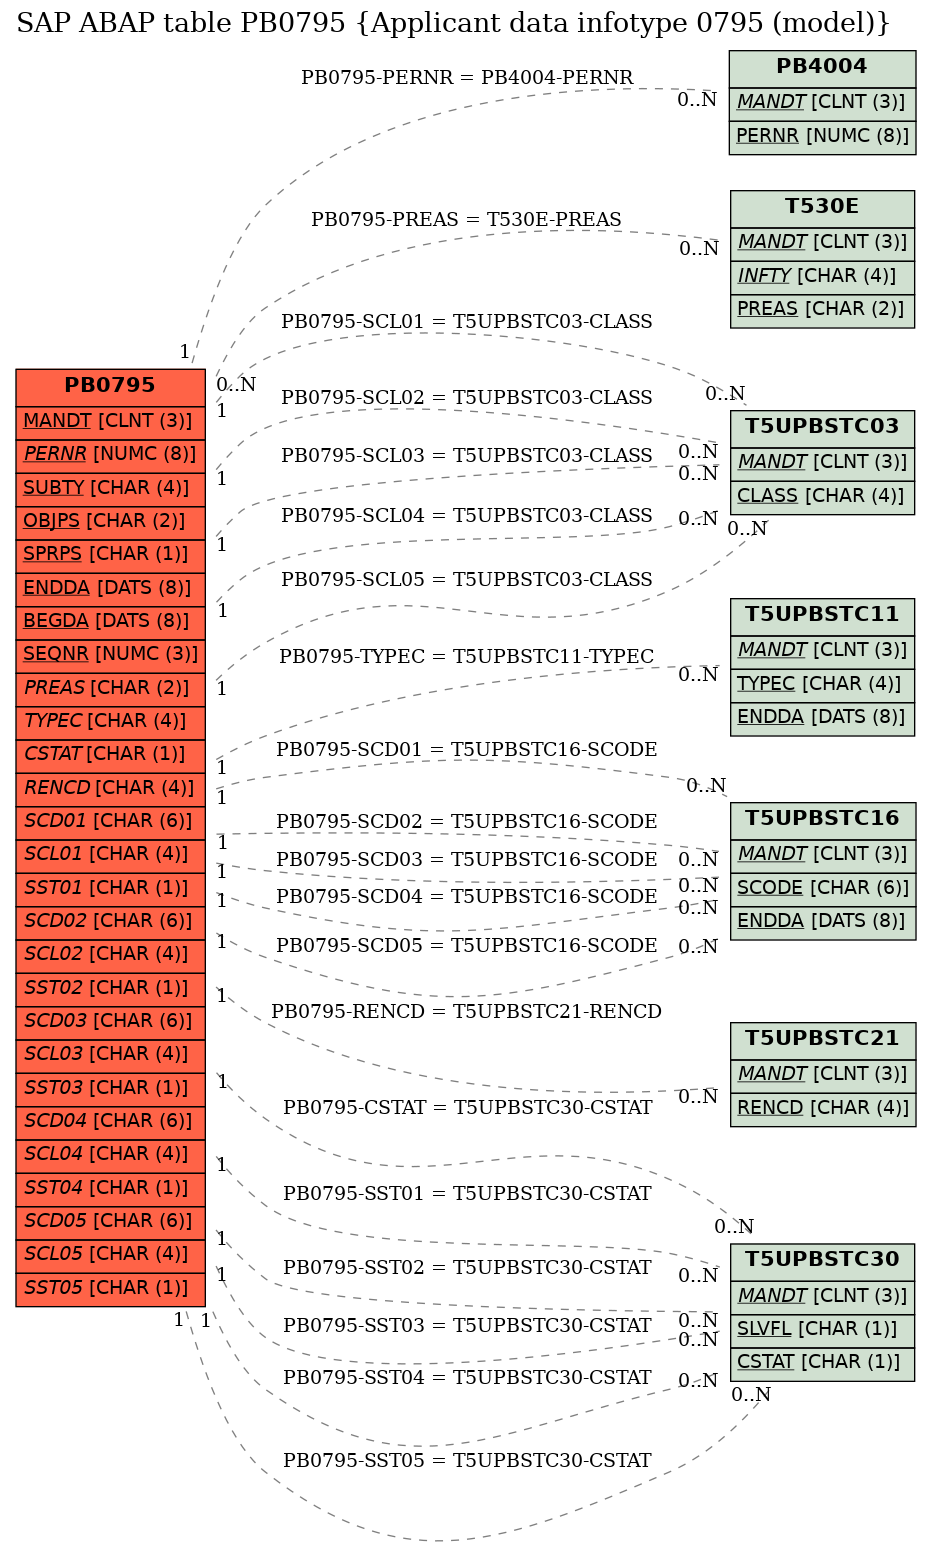 E-R Diagram for table PB0795 (Applicant data infotype 0795 (model))